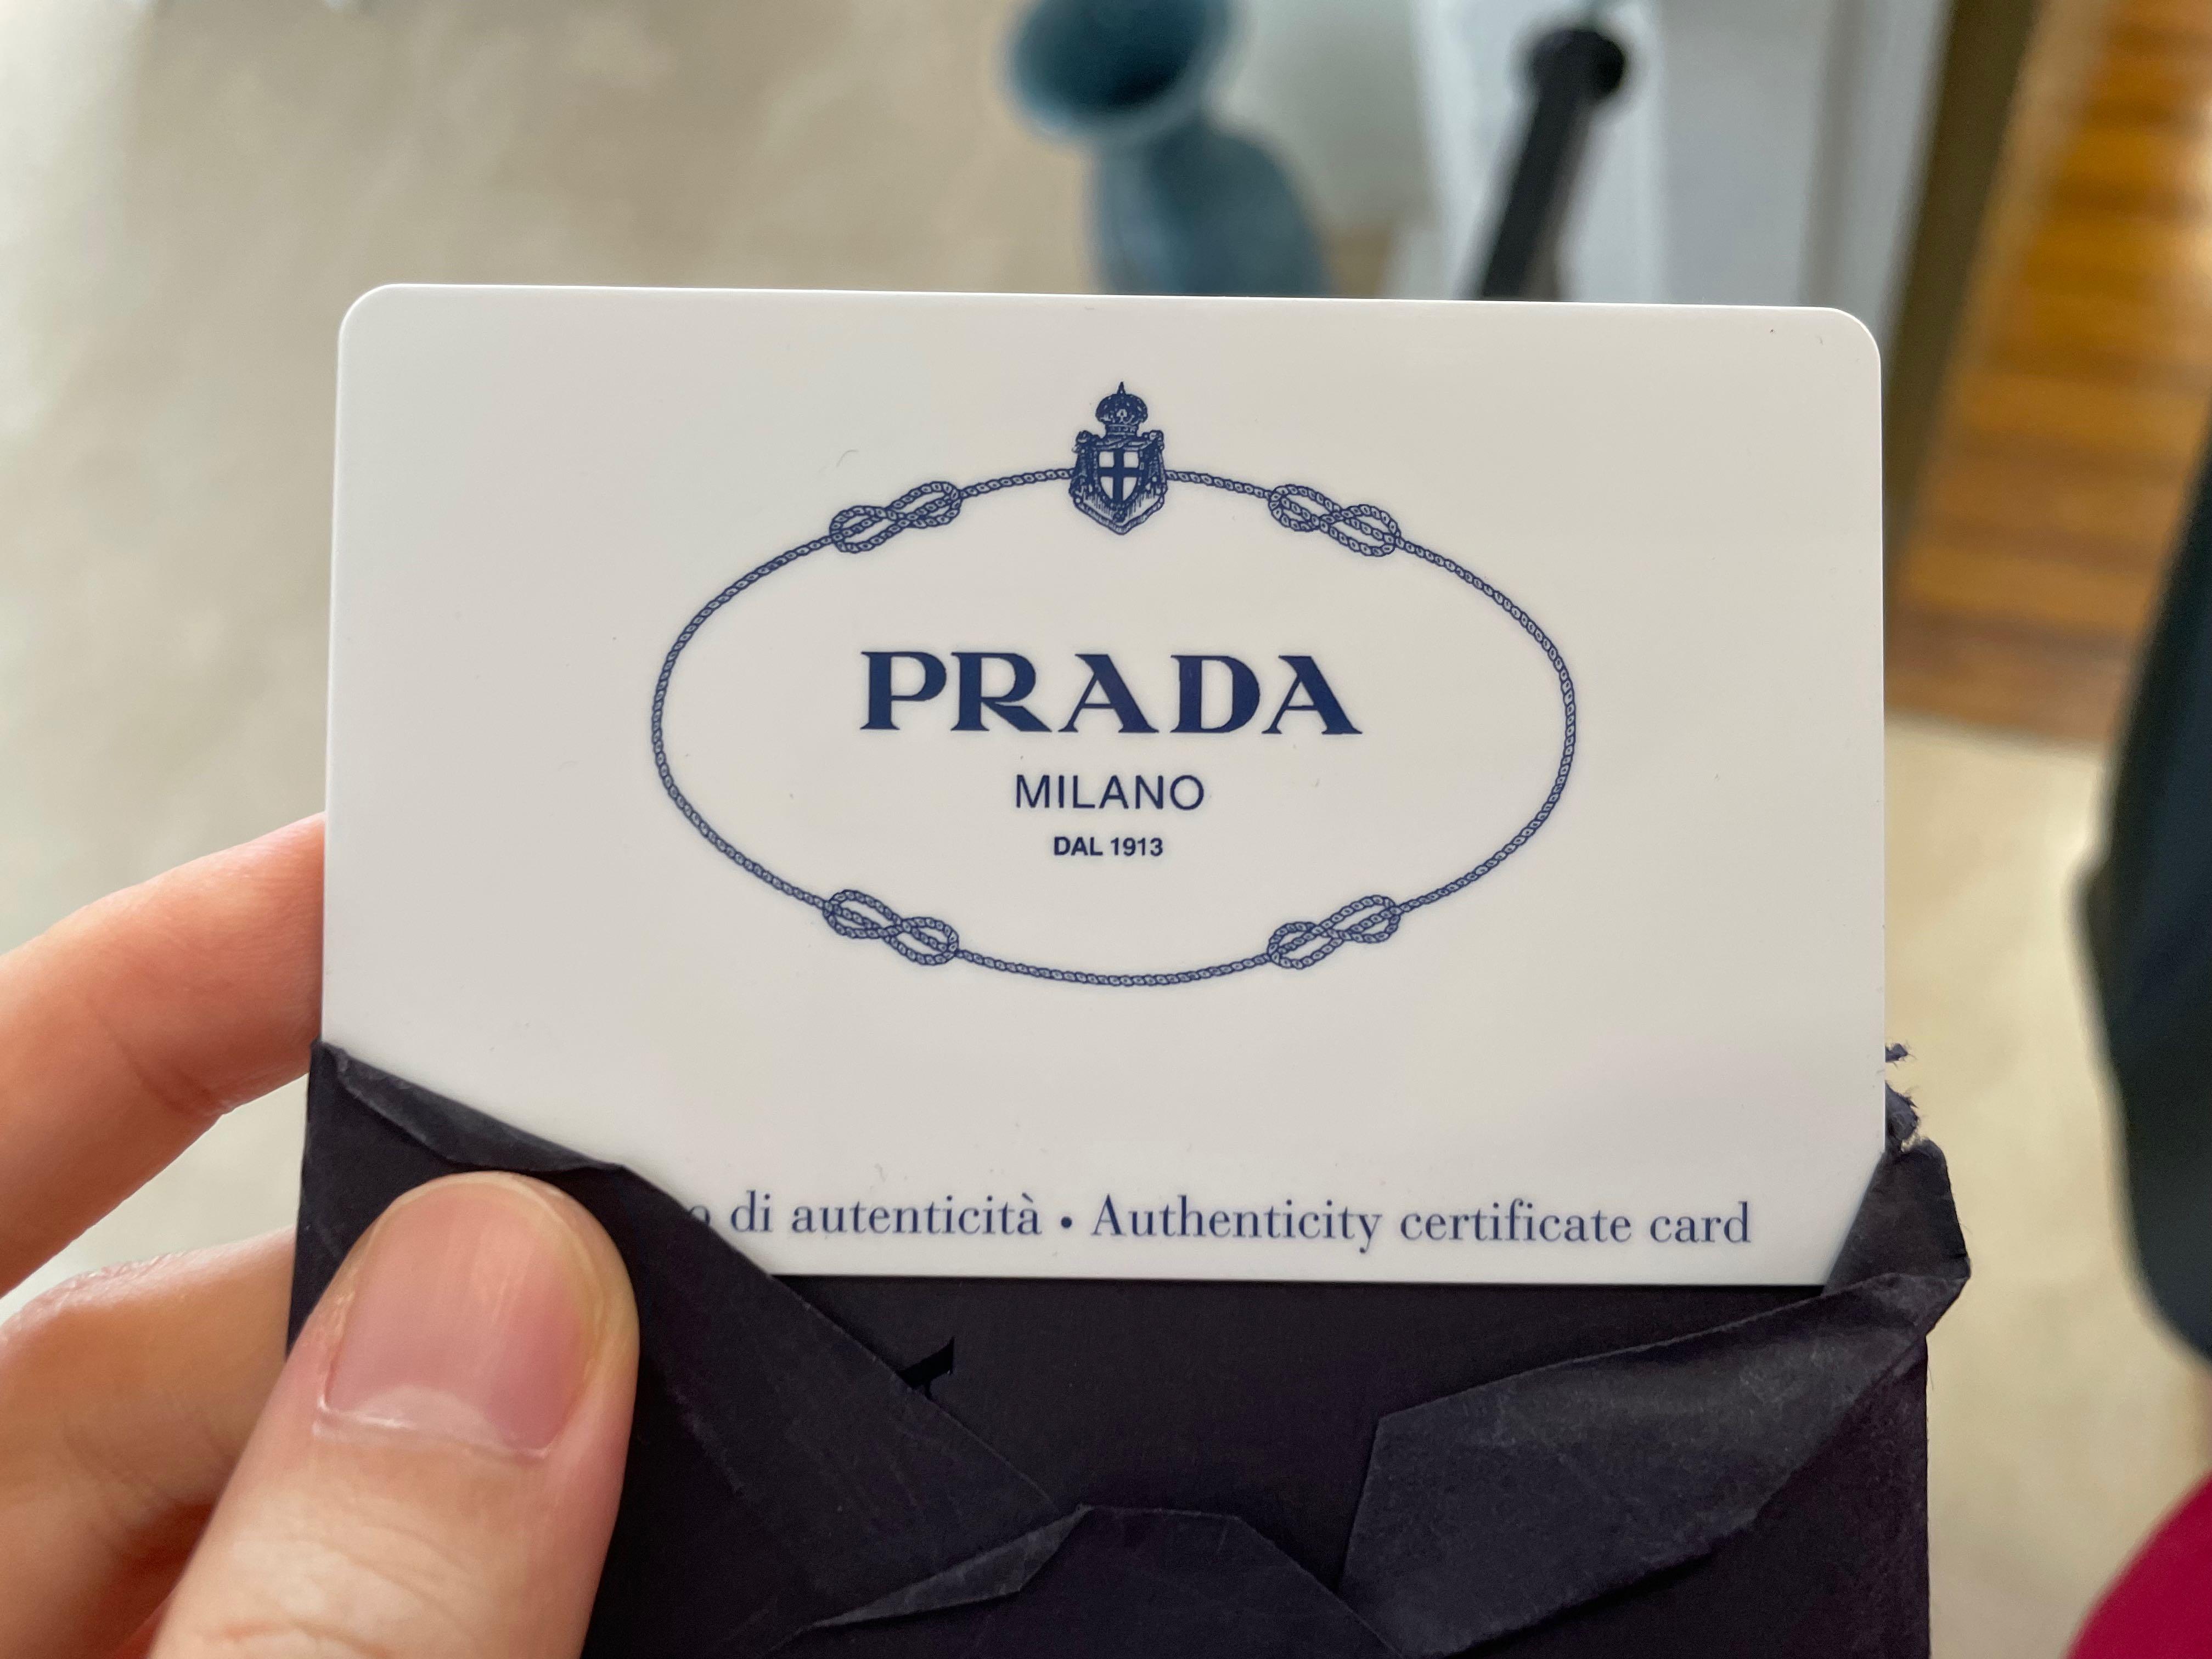 Authenticity certificate Card Prada / Anzeige